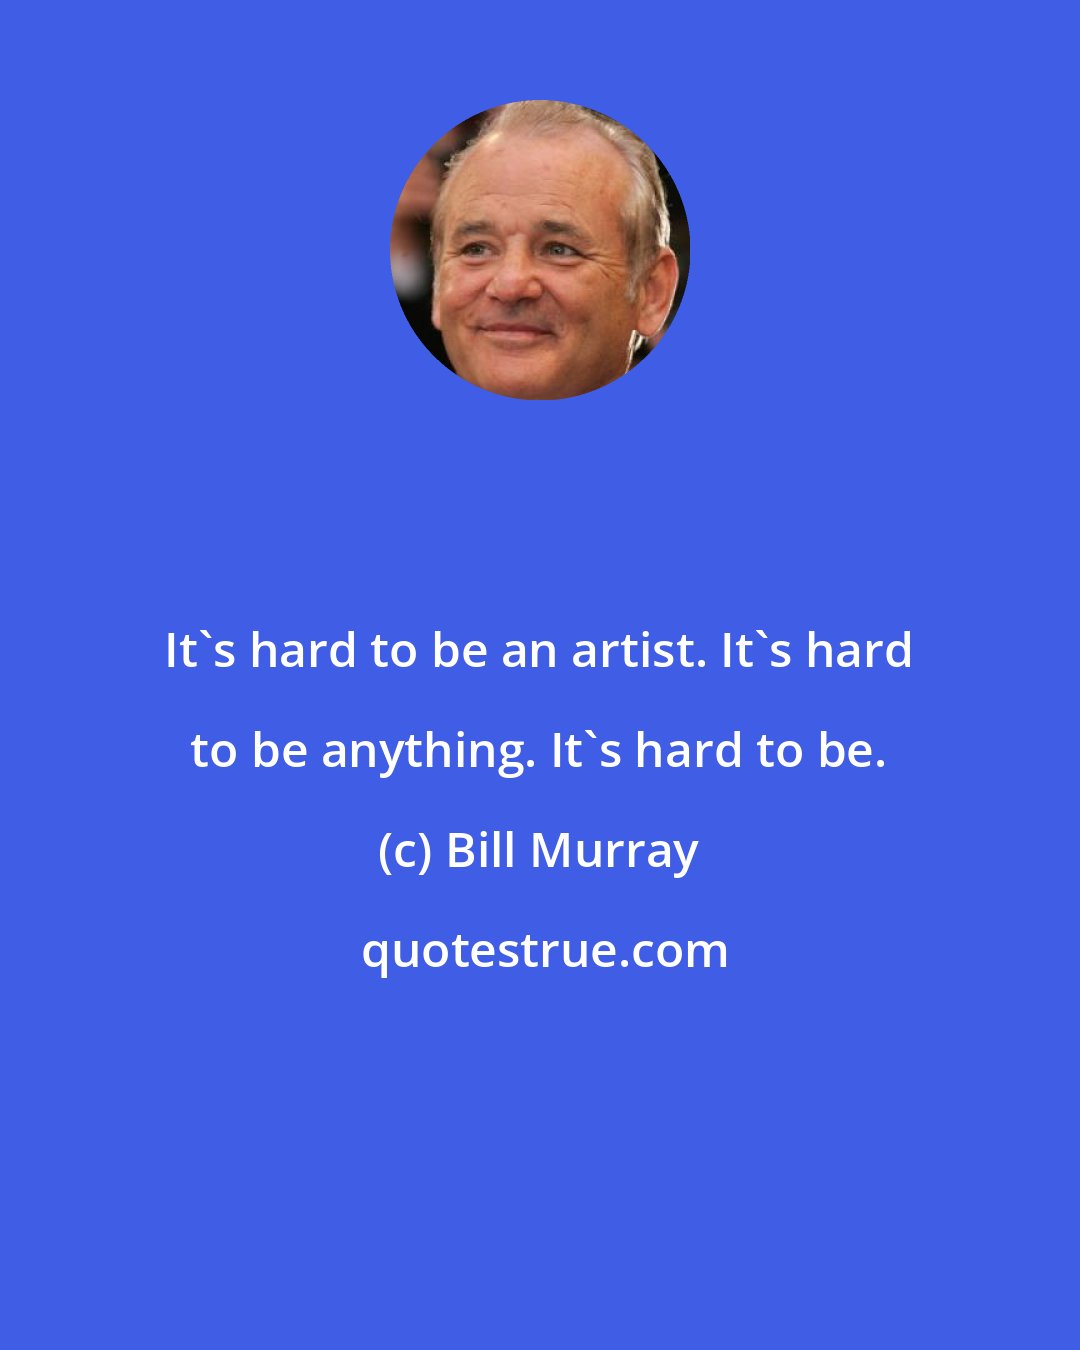 Bill Murray: It's hard to be an artist. It's hard to be anything. It's hard to be.